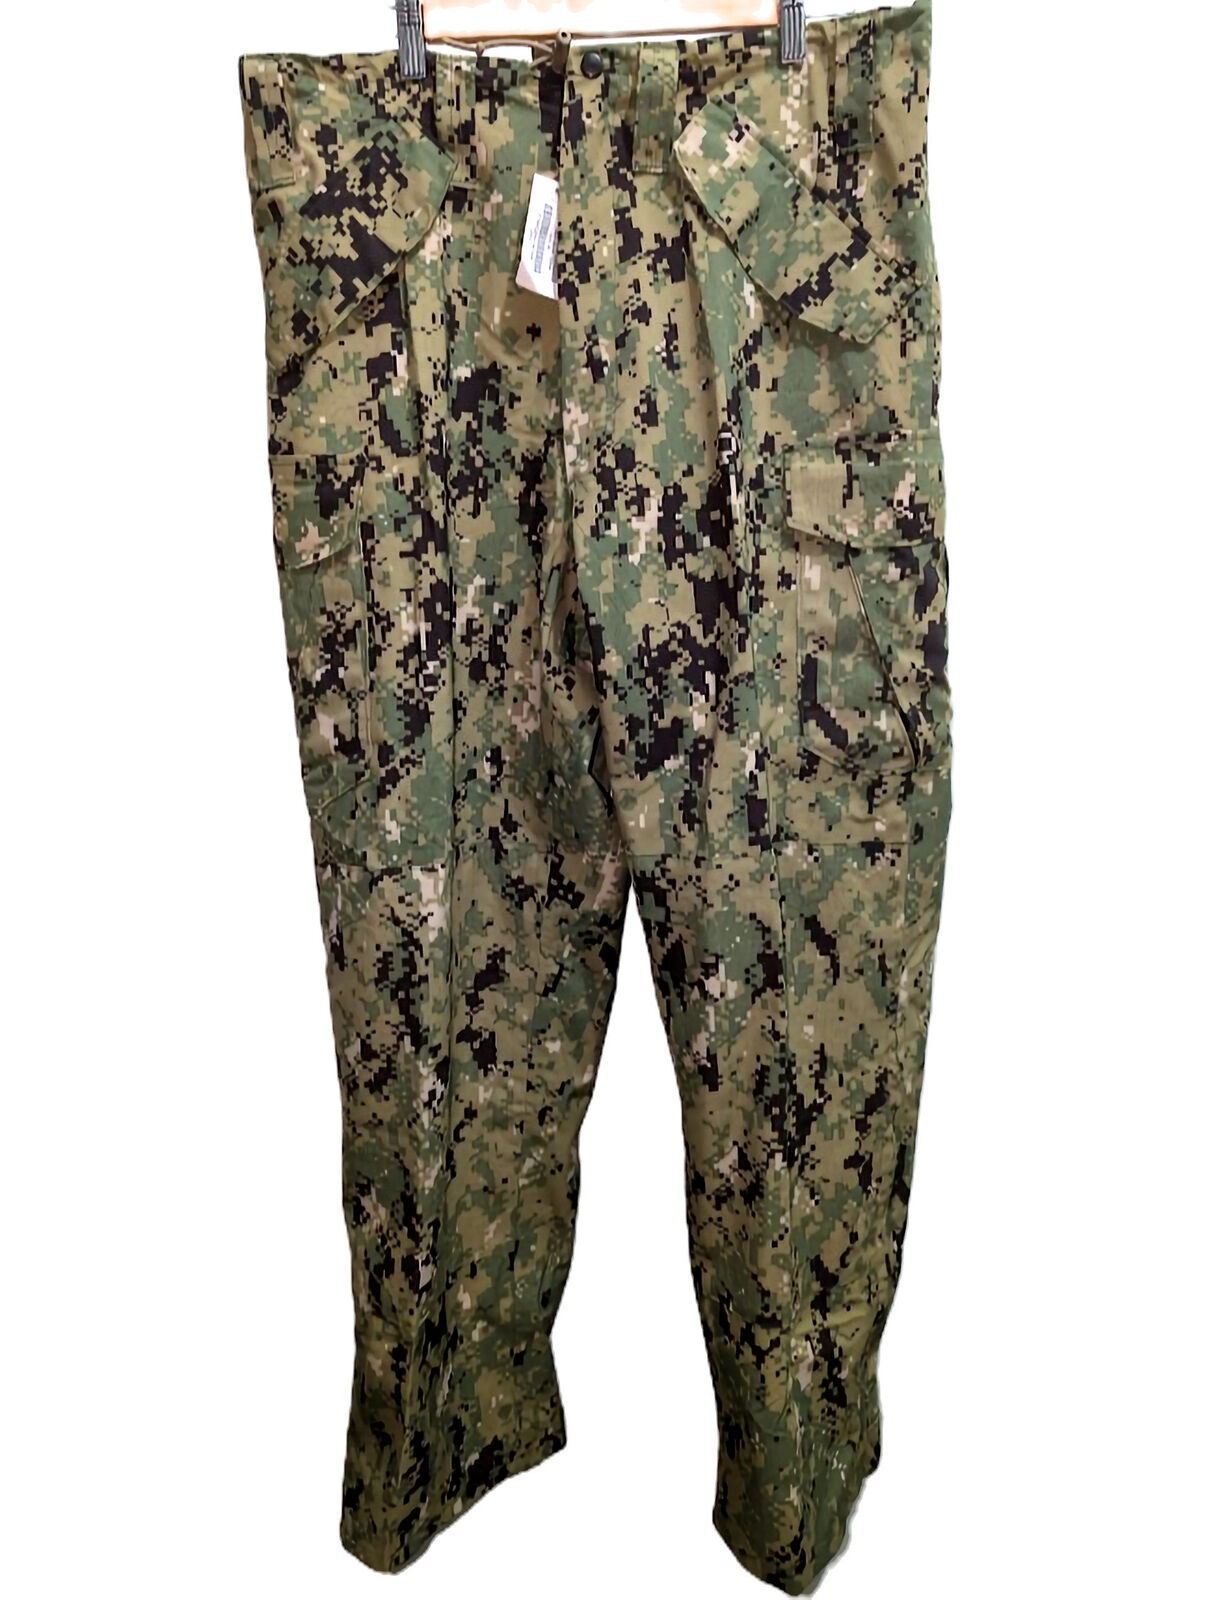 USGI NWU Type III APEC GorTex Trousers - Medium/Large